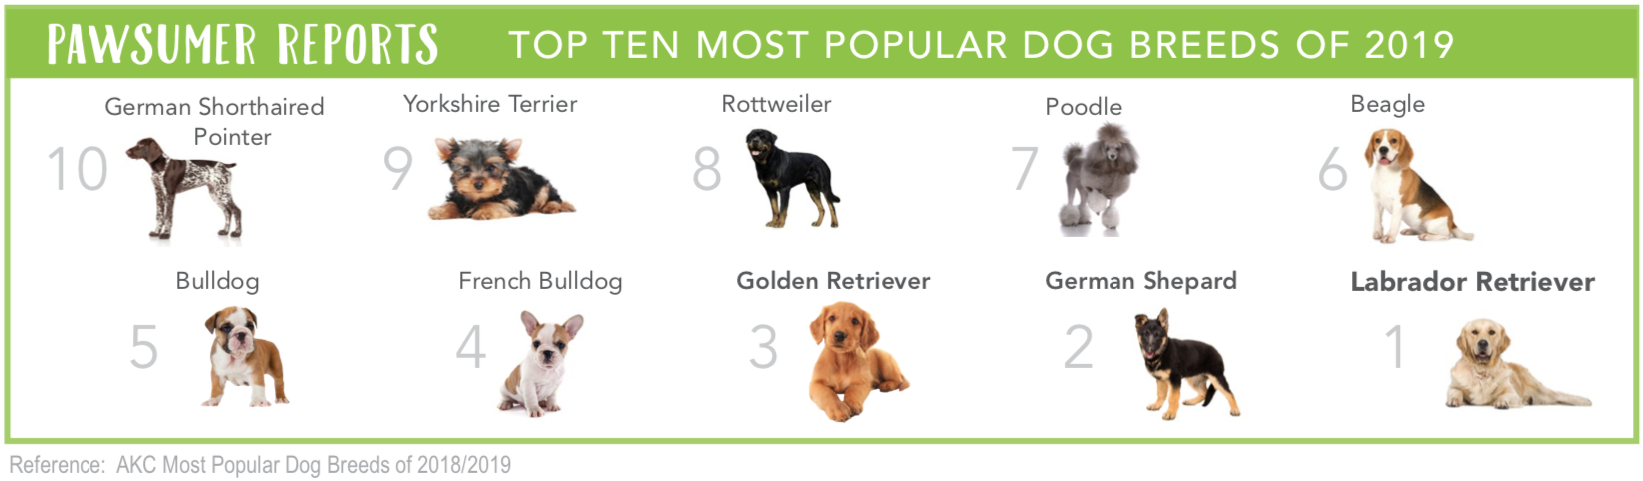 top dog breeds of 2019